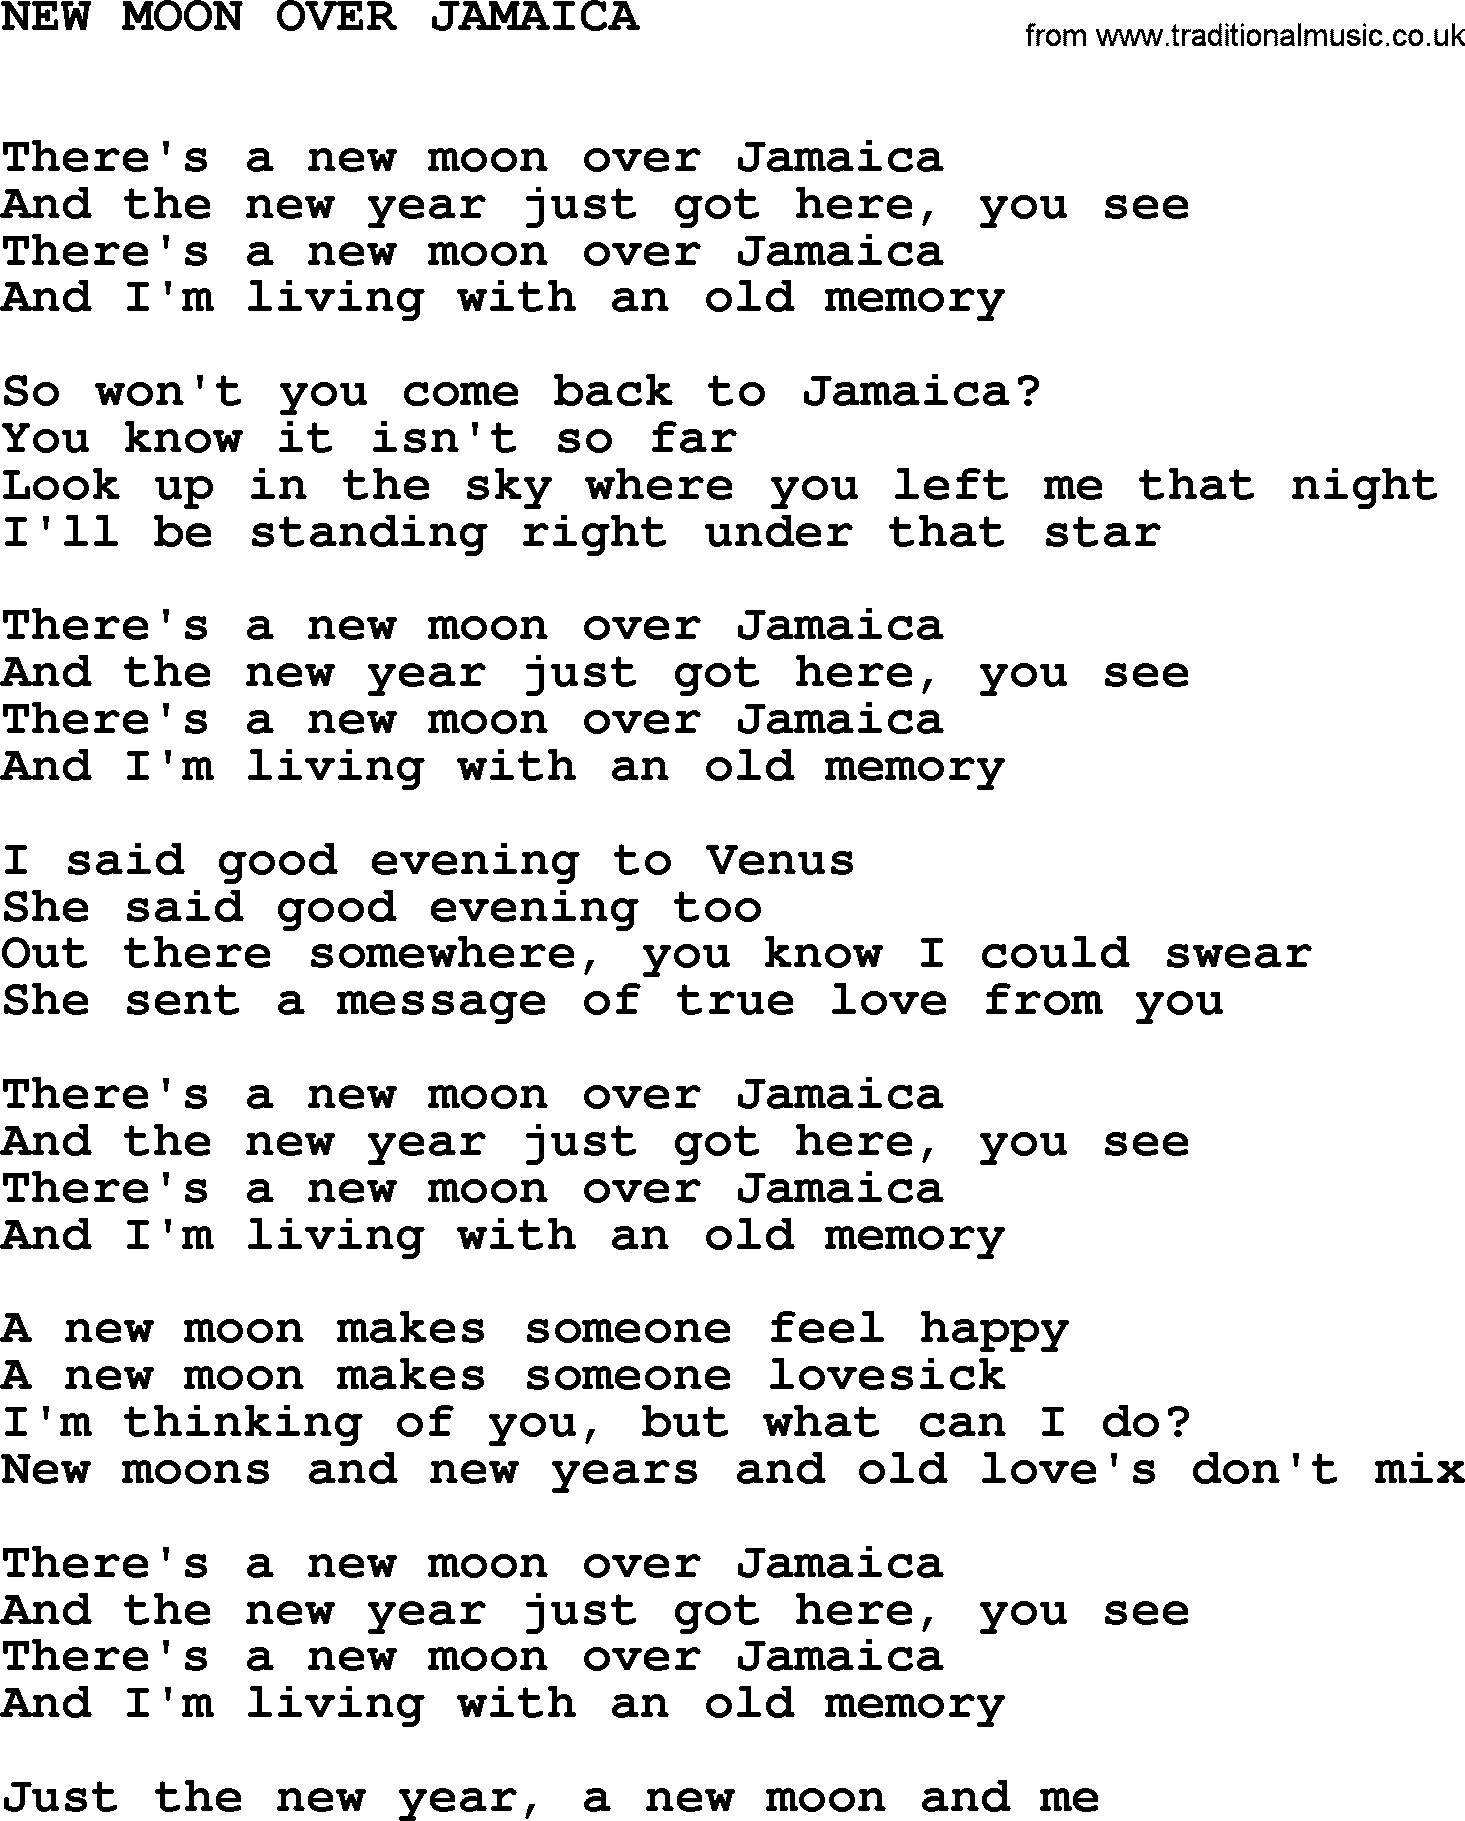 Johnny Cash song New Moon Over Jamaica.txt lyrics